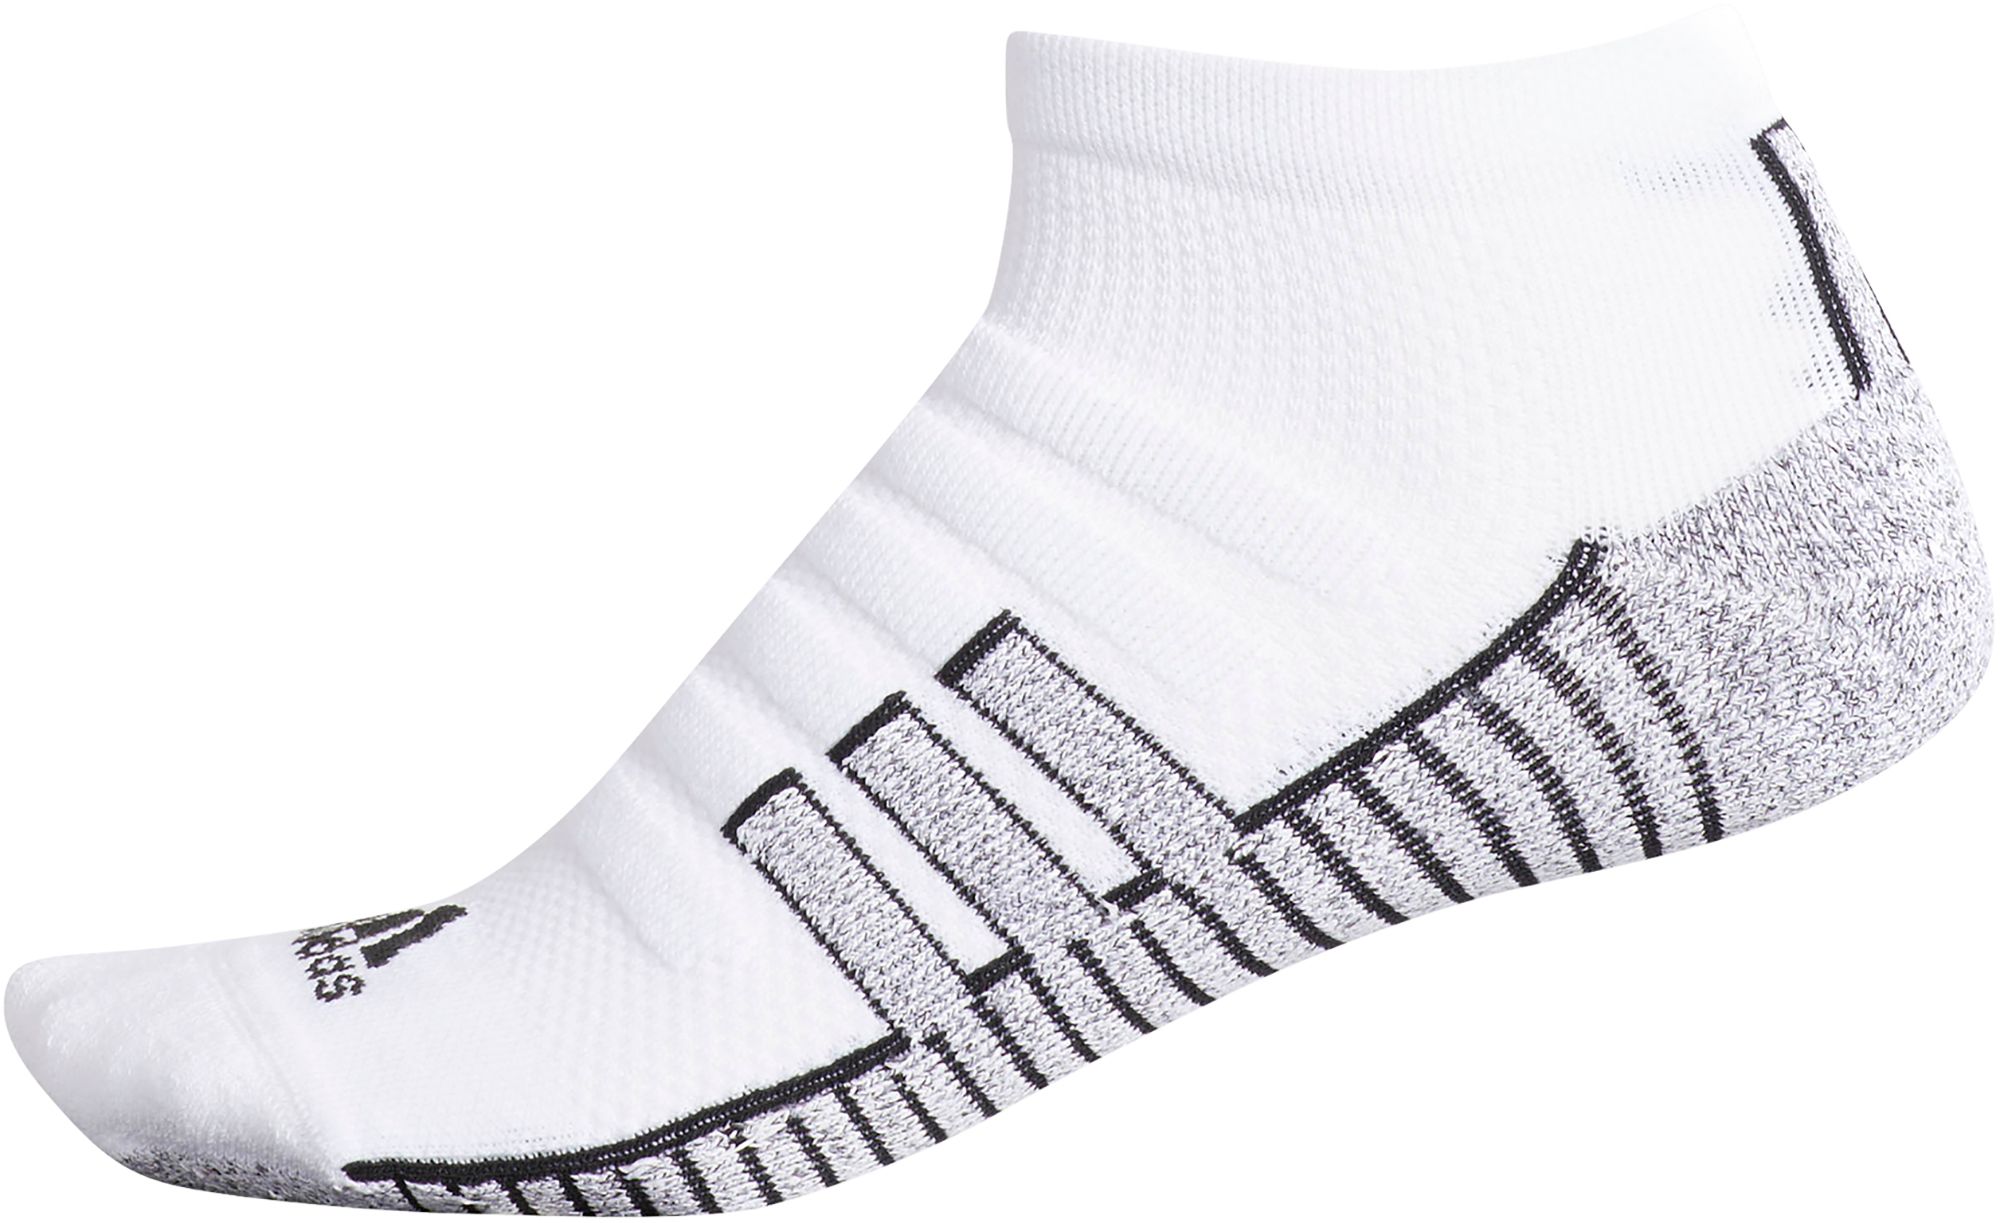 adidas golf socks